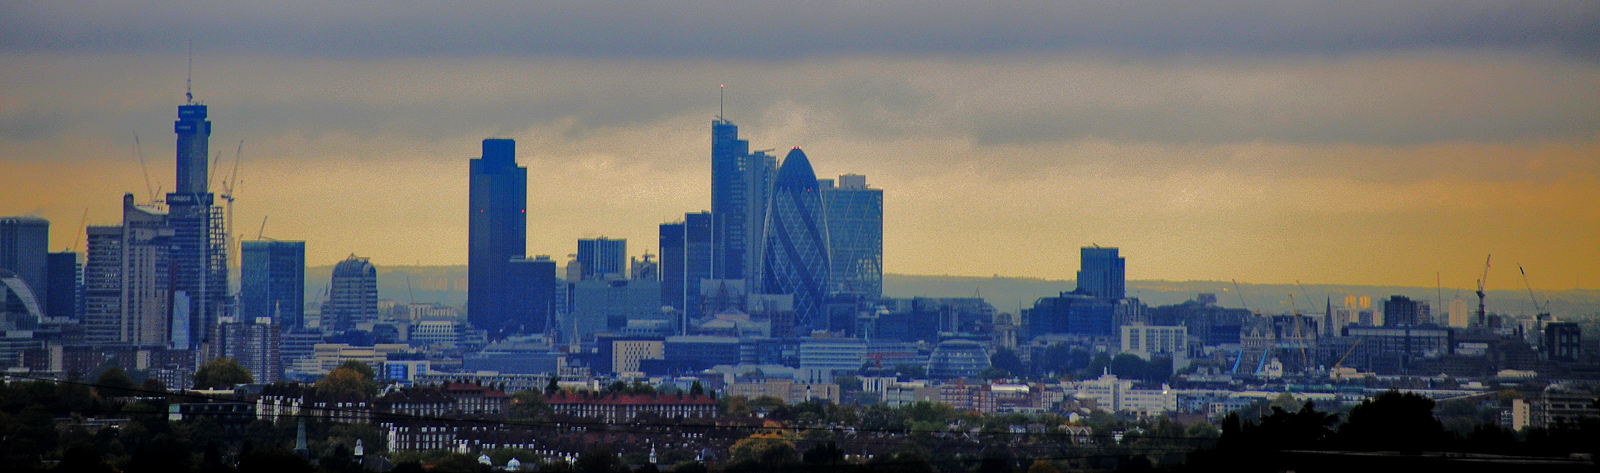 London City Skyline.jpg